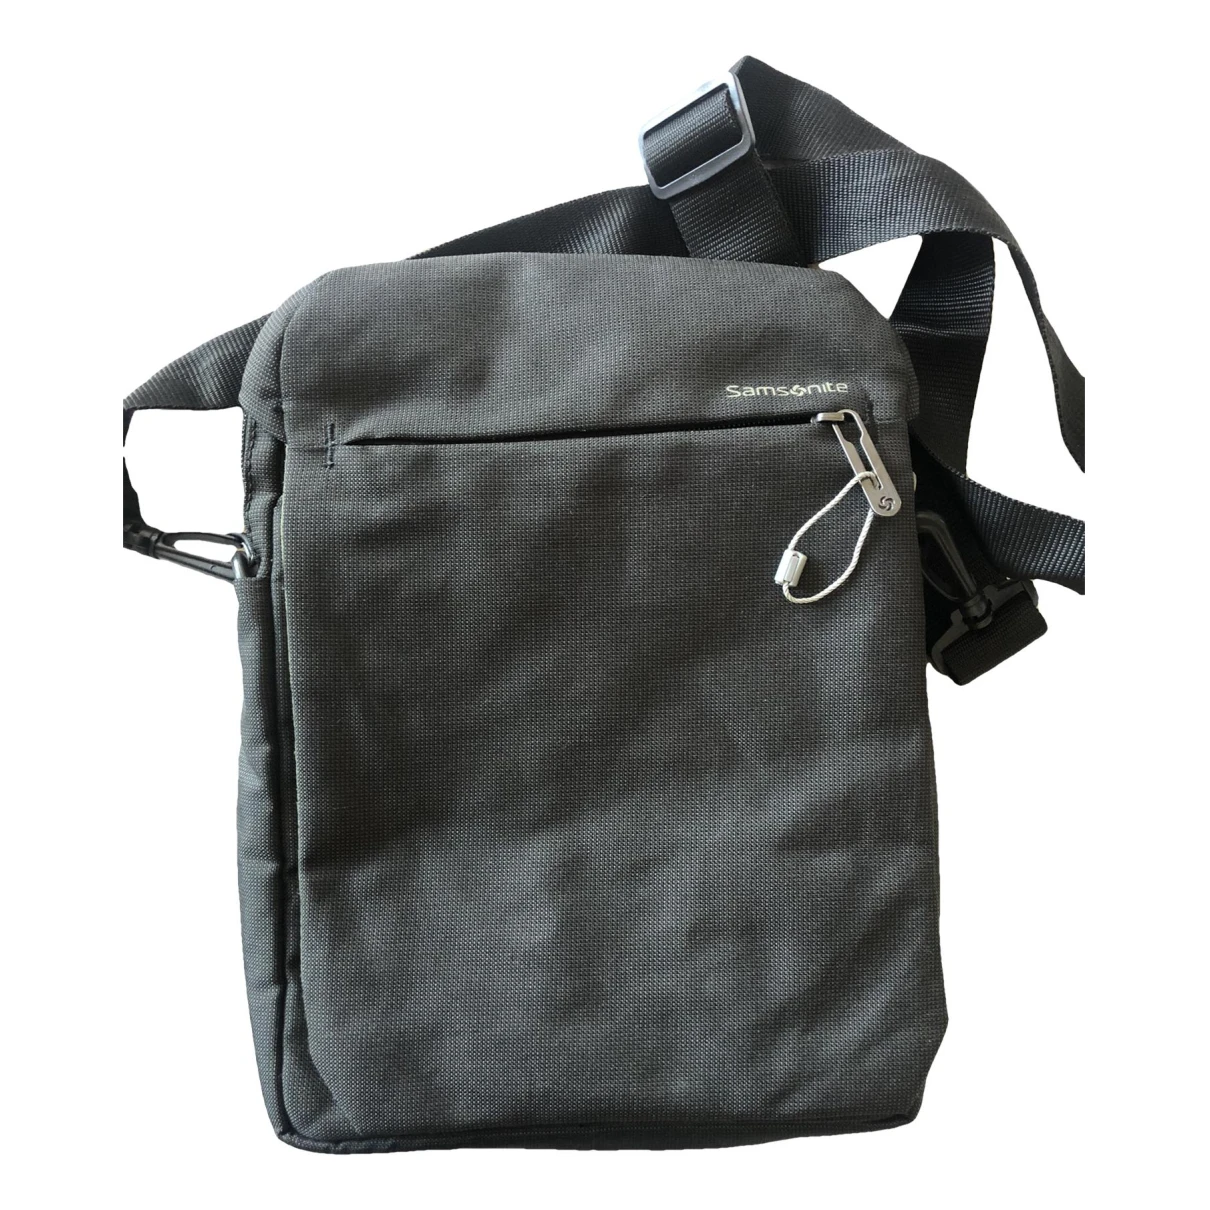 Pre-owned Samsonite Small Bag In Black